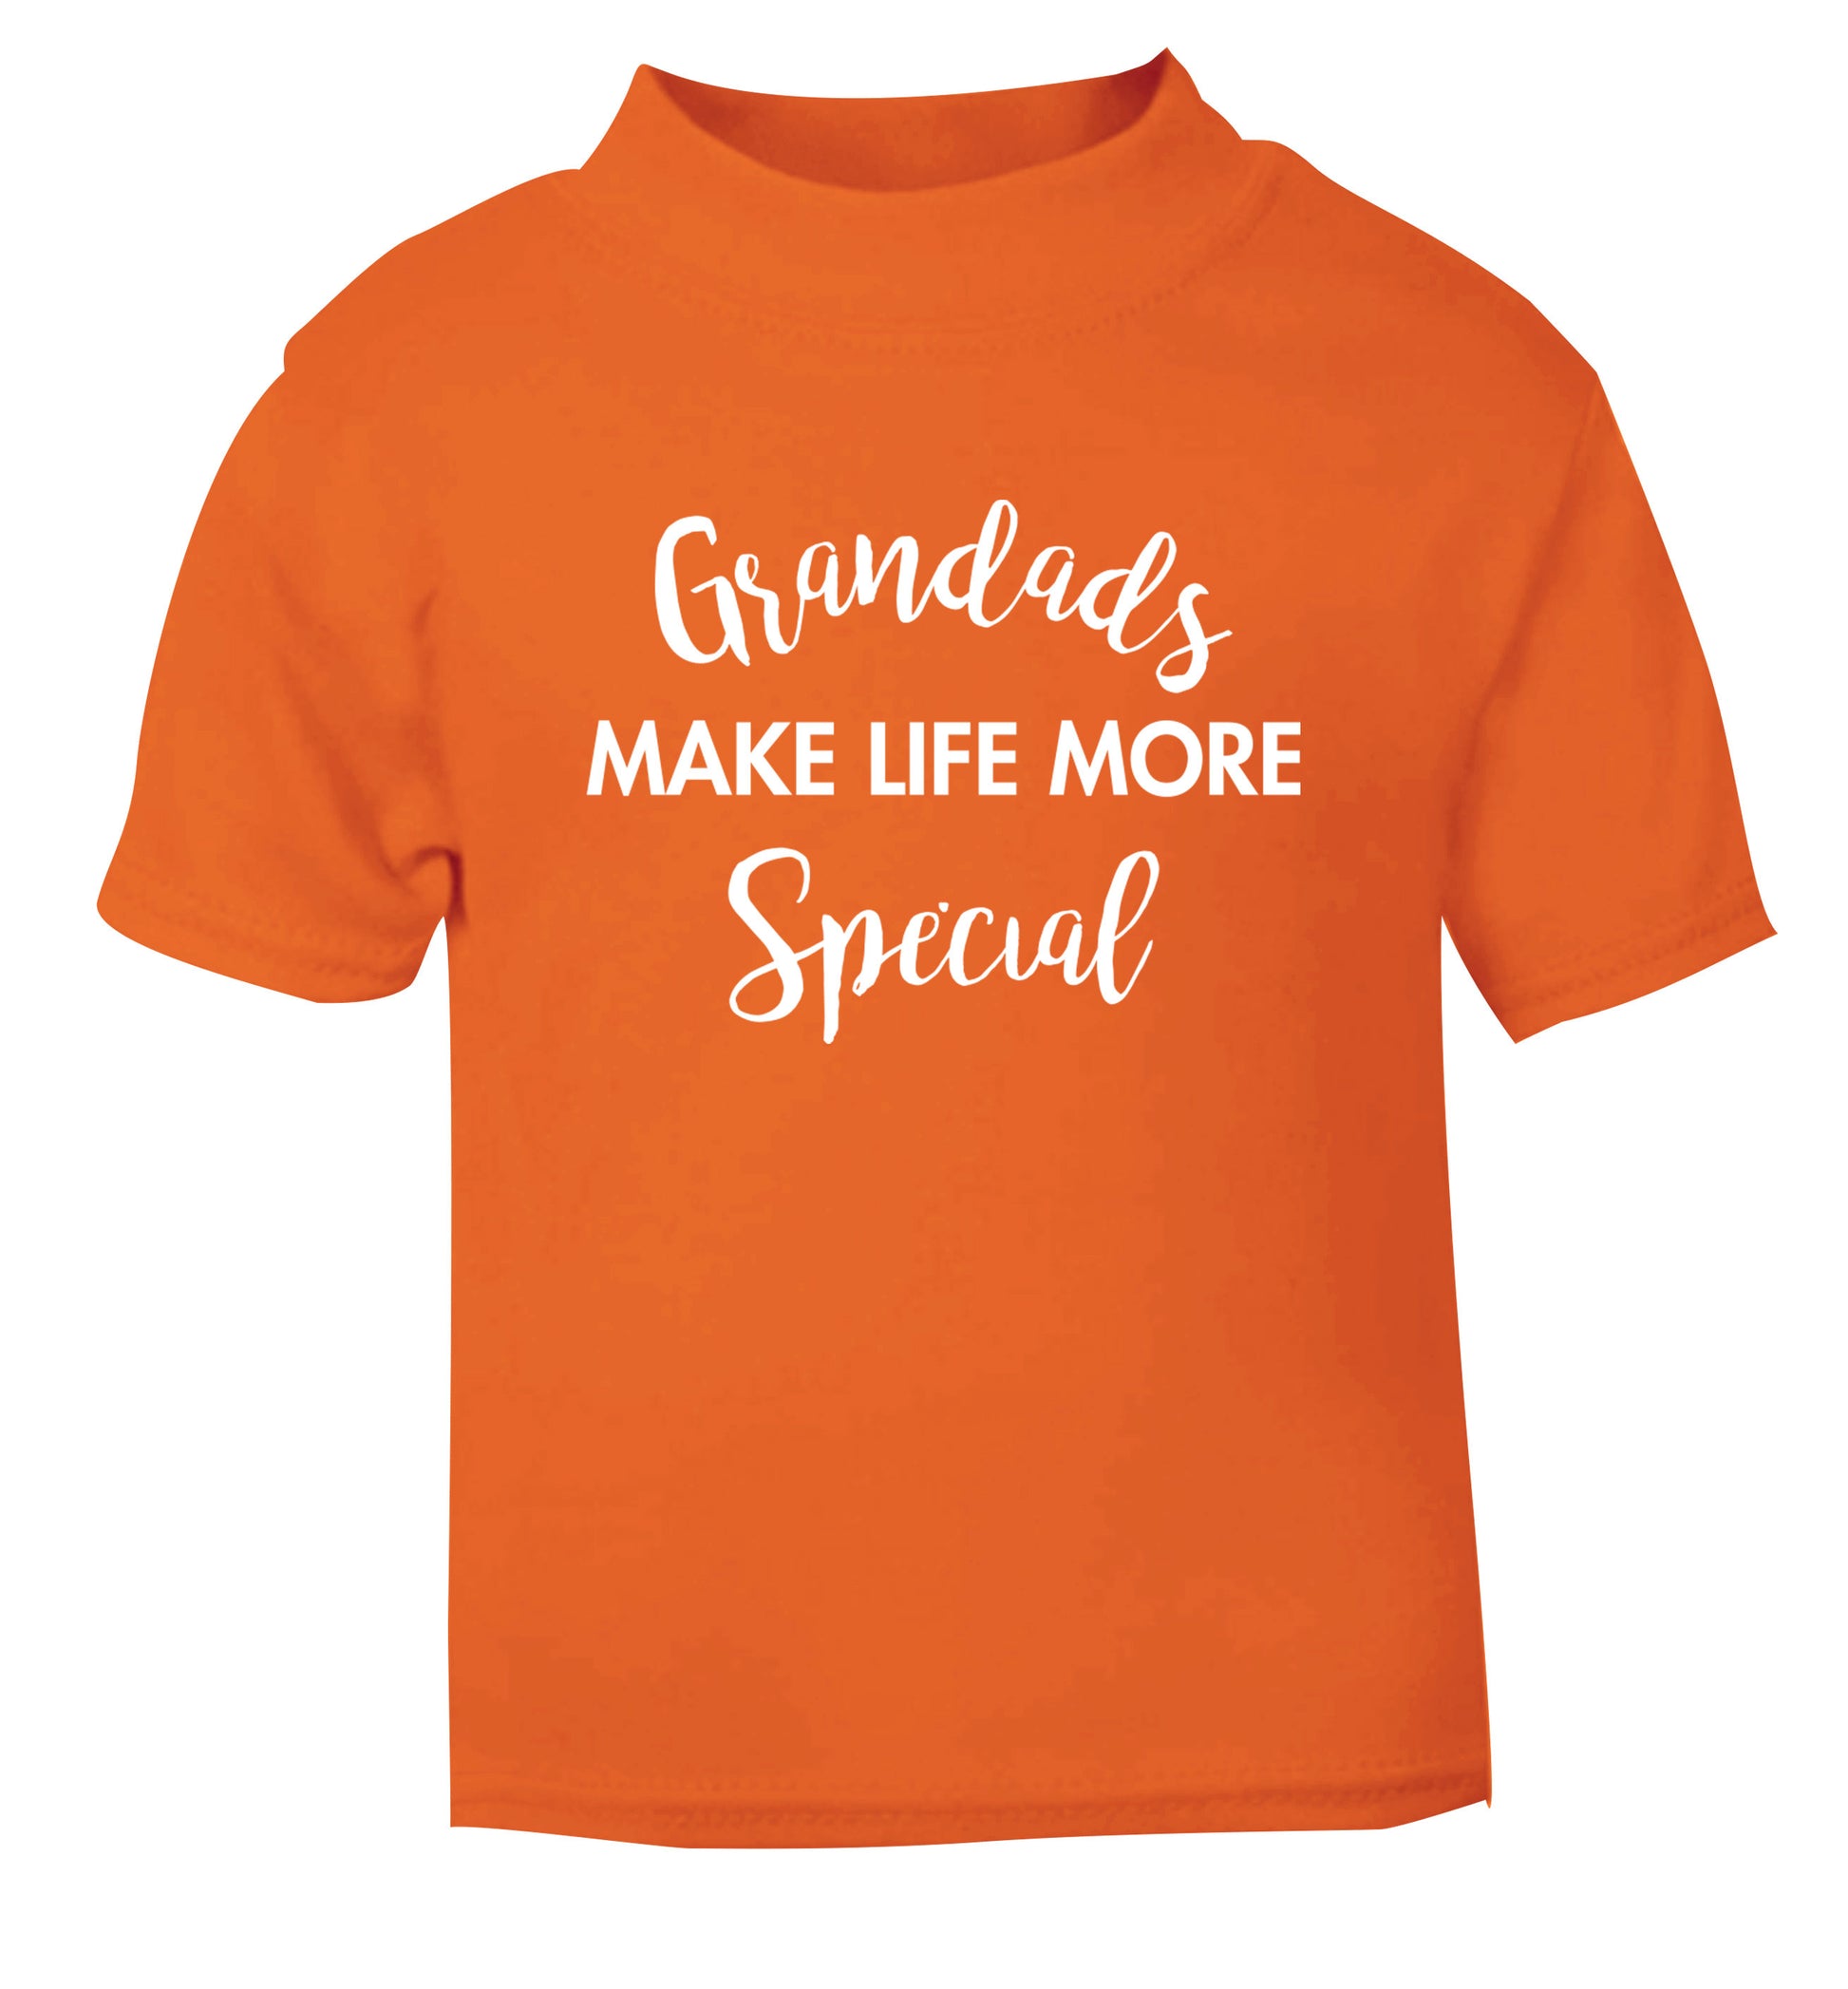 Grandads make life more special orange Baby Toddler Tshirt 2 Years